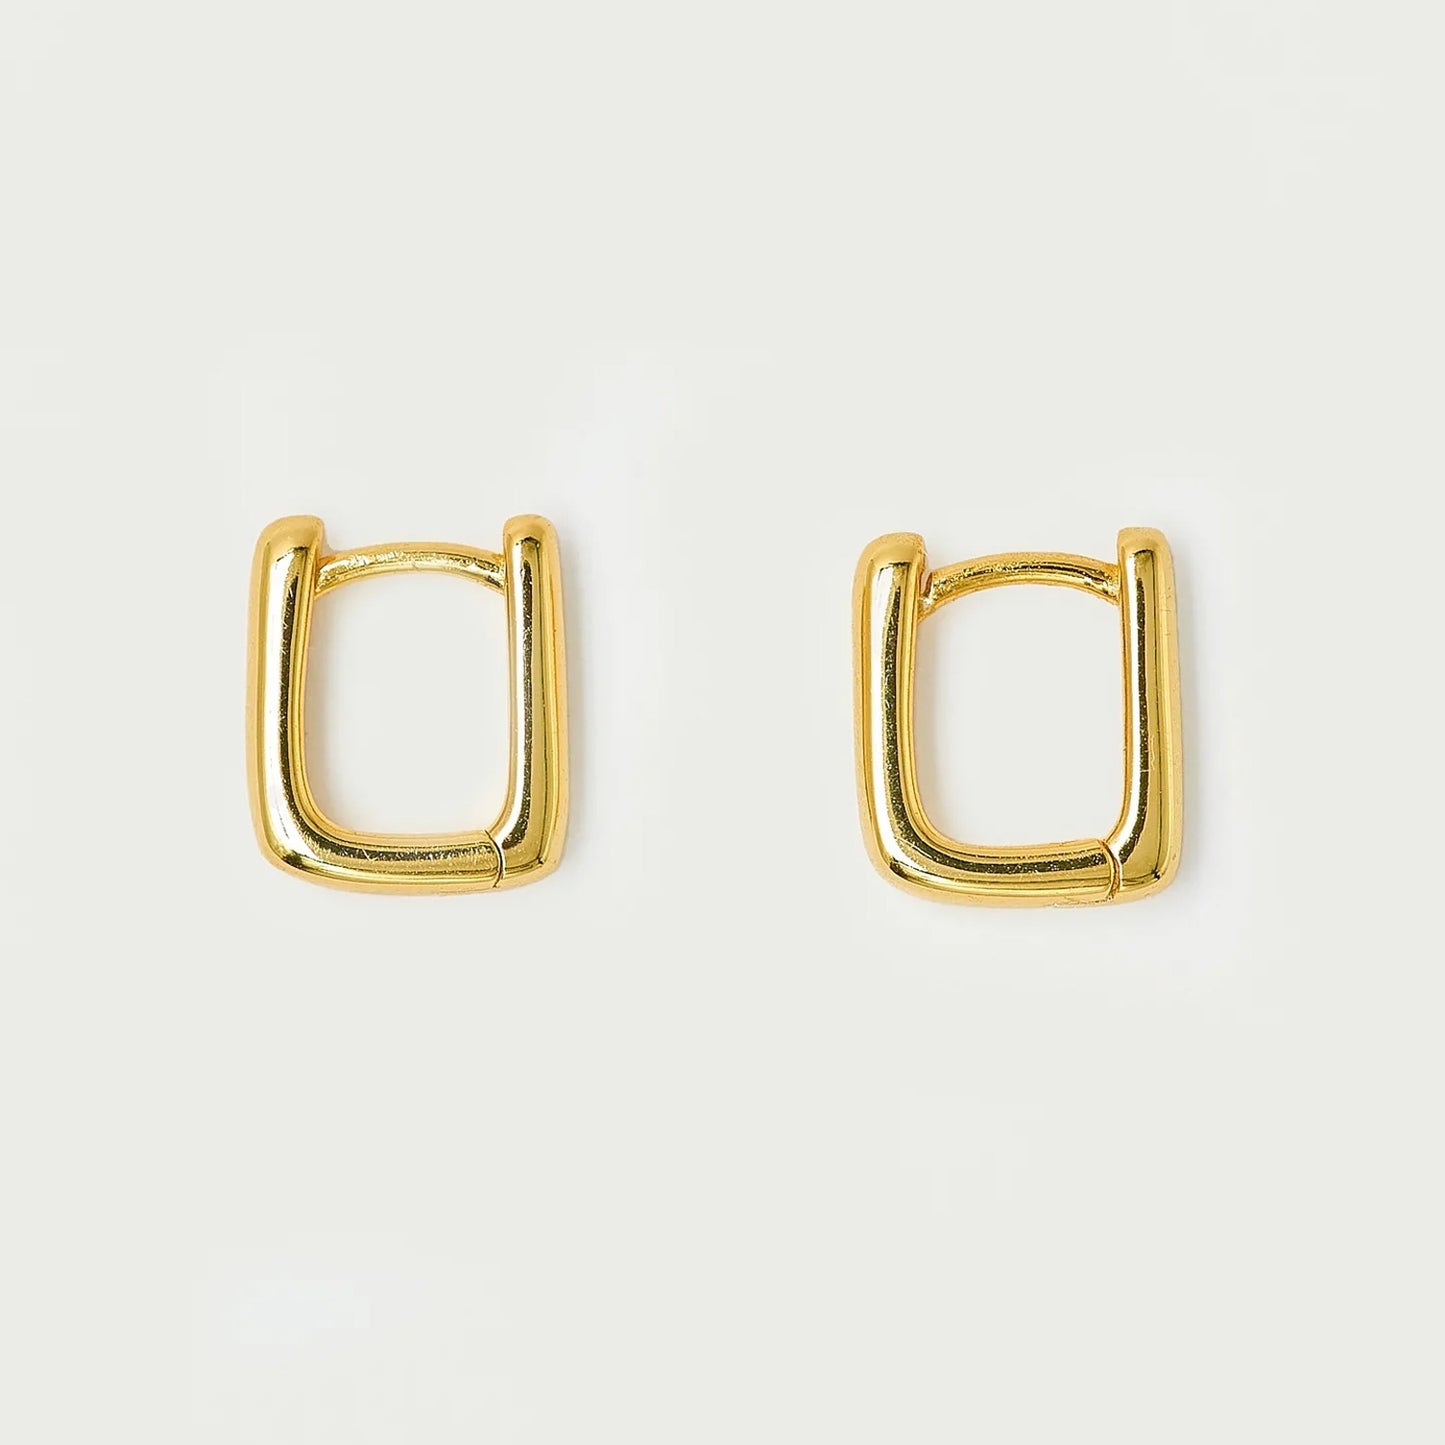 Brie Leon - Mini Bloq Earrings - Gold